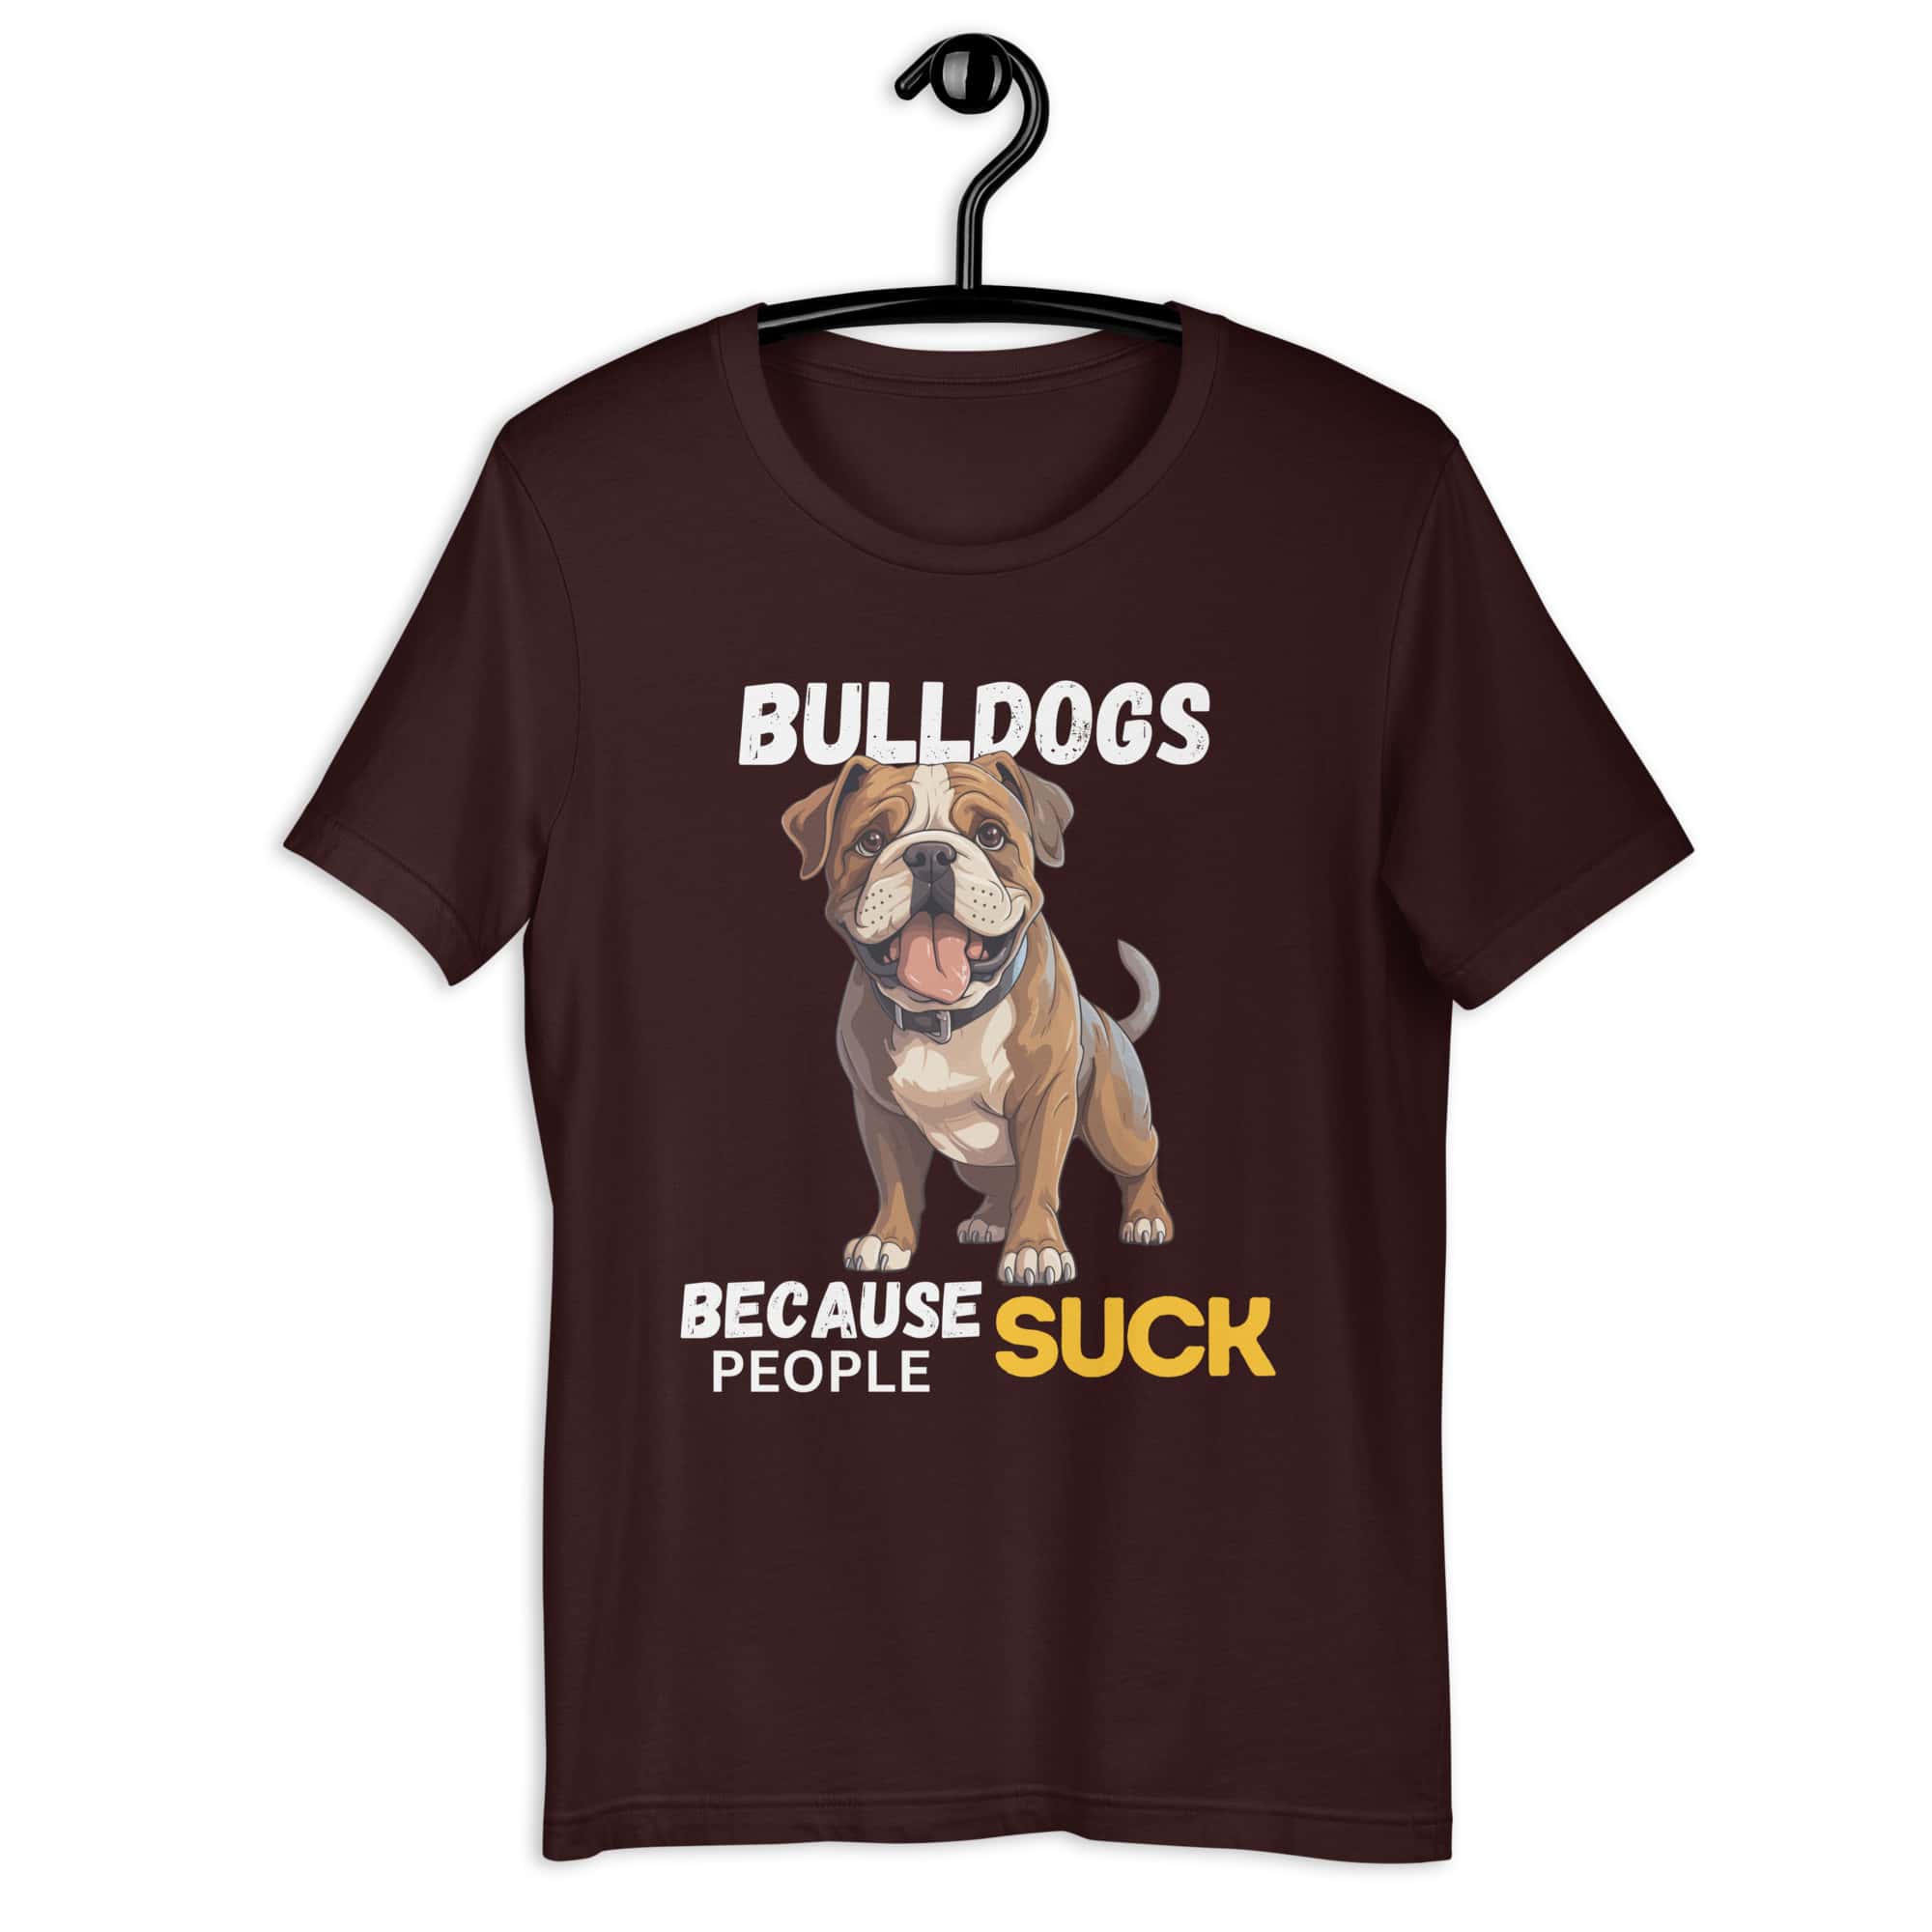 Bulldogs Because People Suck Unisex T-Shirt brown